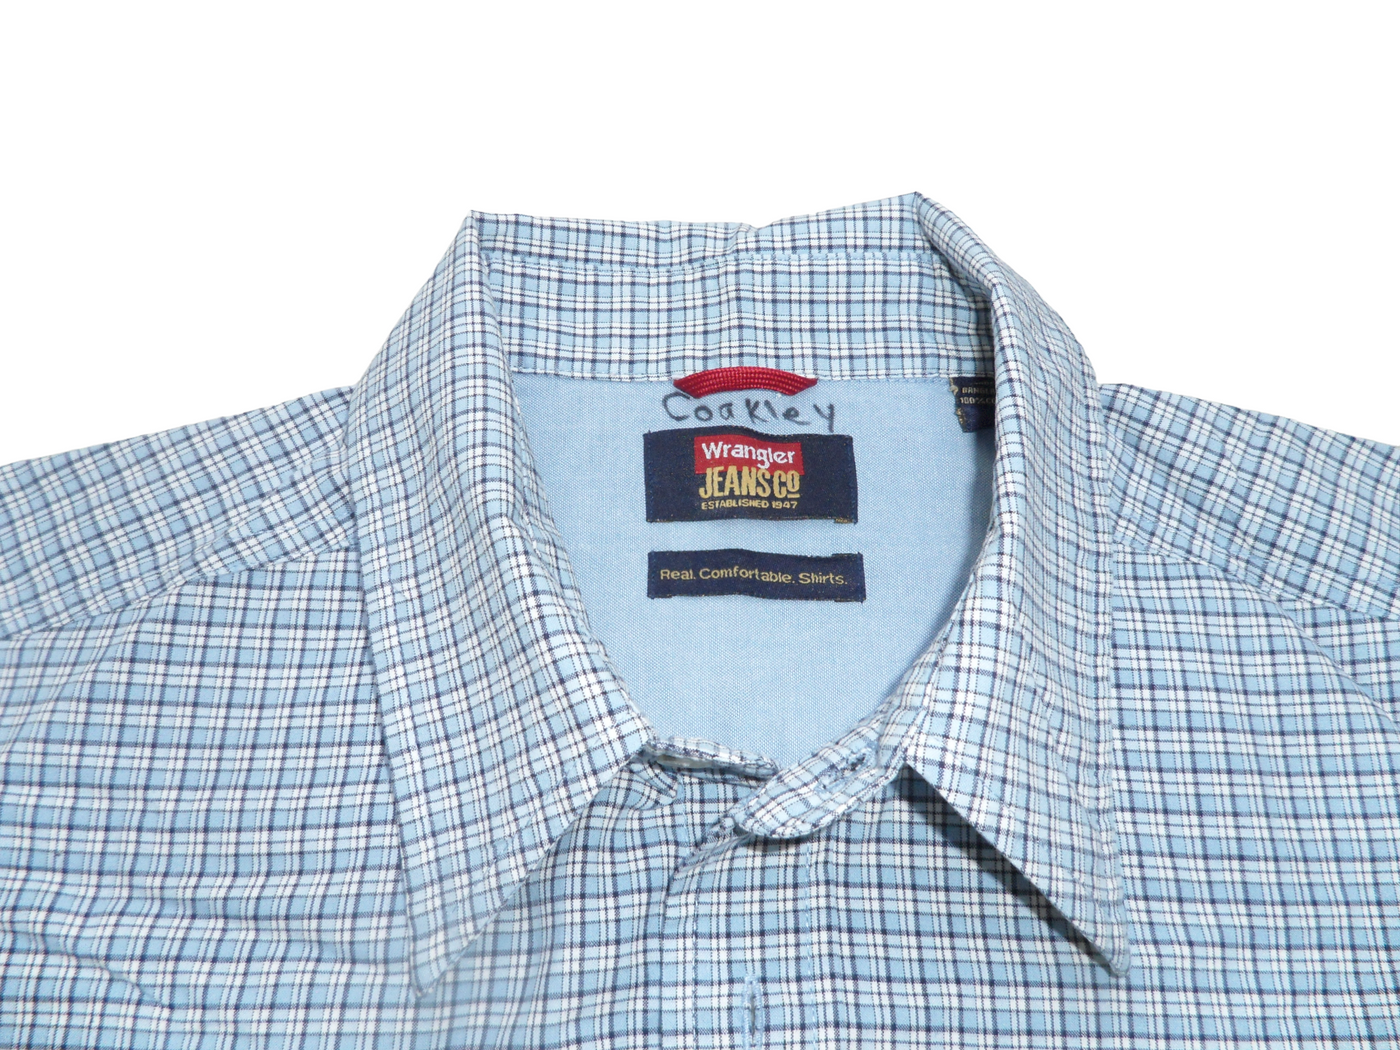 Vintage Wrangler Men's Short Sleeve 100% Cotton Checked Shirt Light Blue X - Large